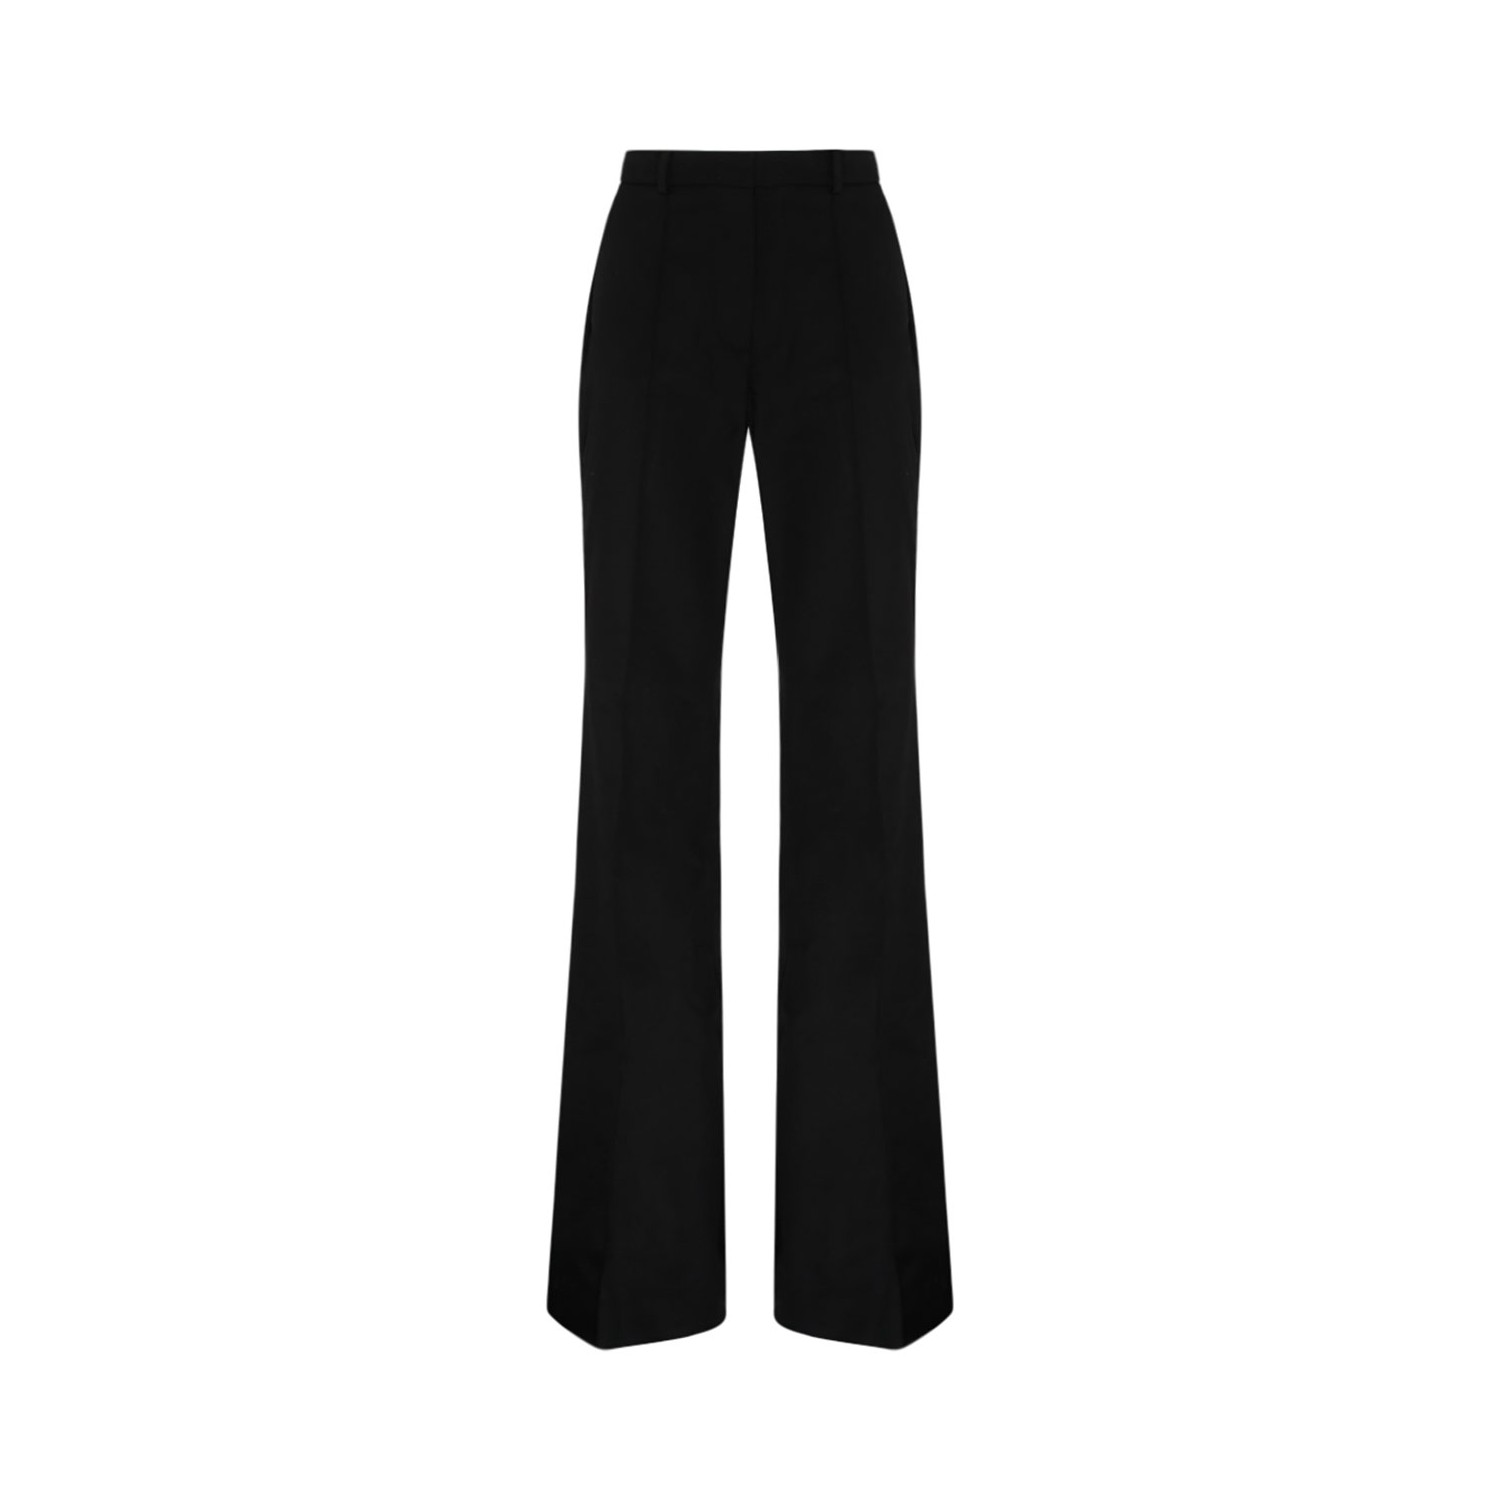 https://www.colognese.com/10799-thickbox_default/max-mara-sportmax-formia-black-cotton-long-flare-pants-uwvt.jpg